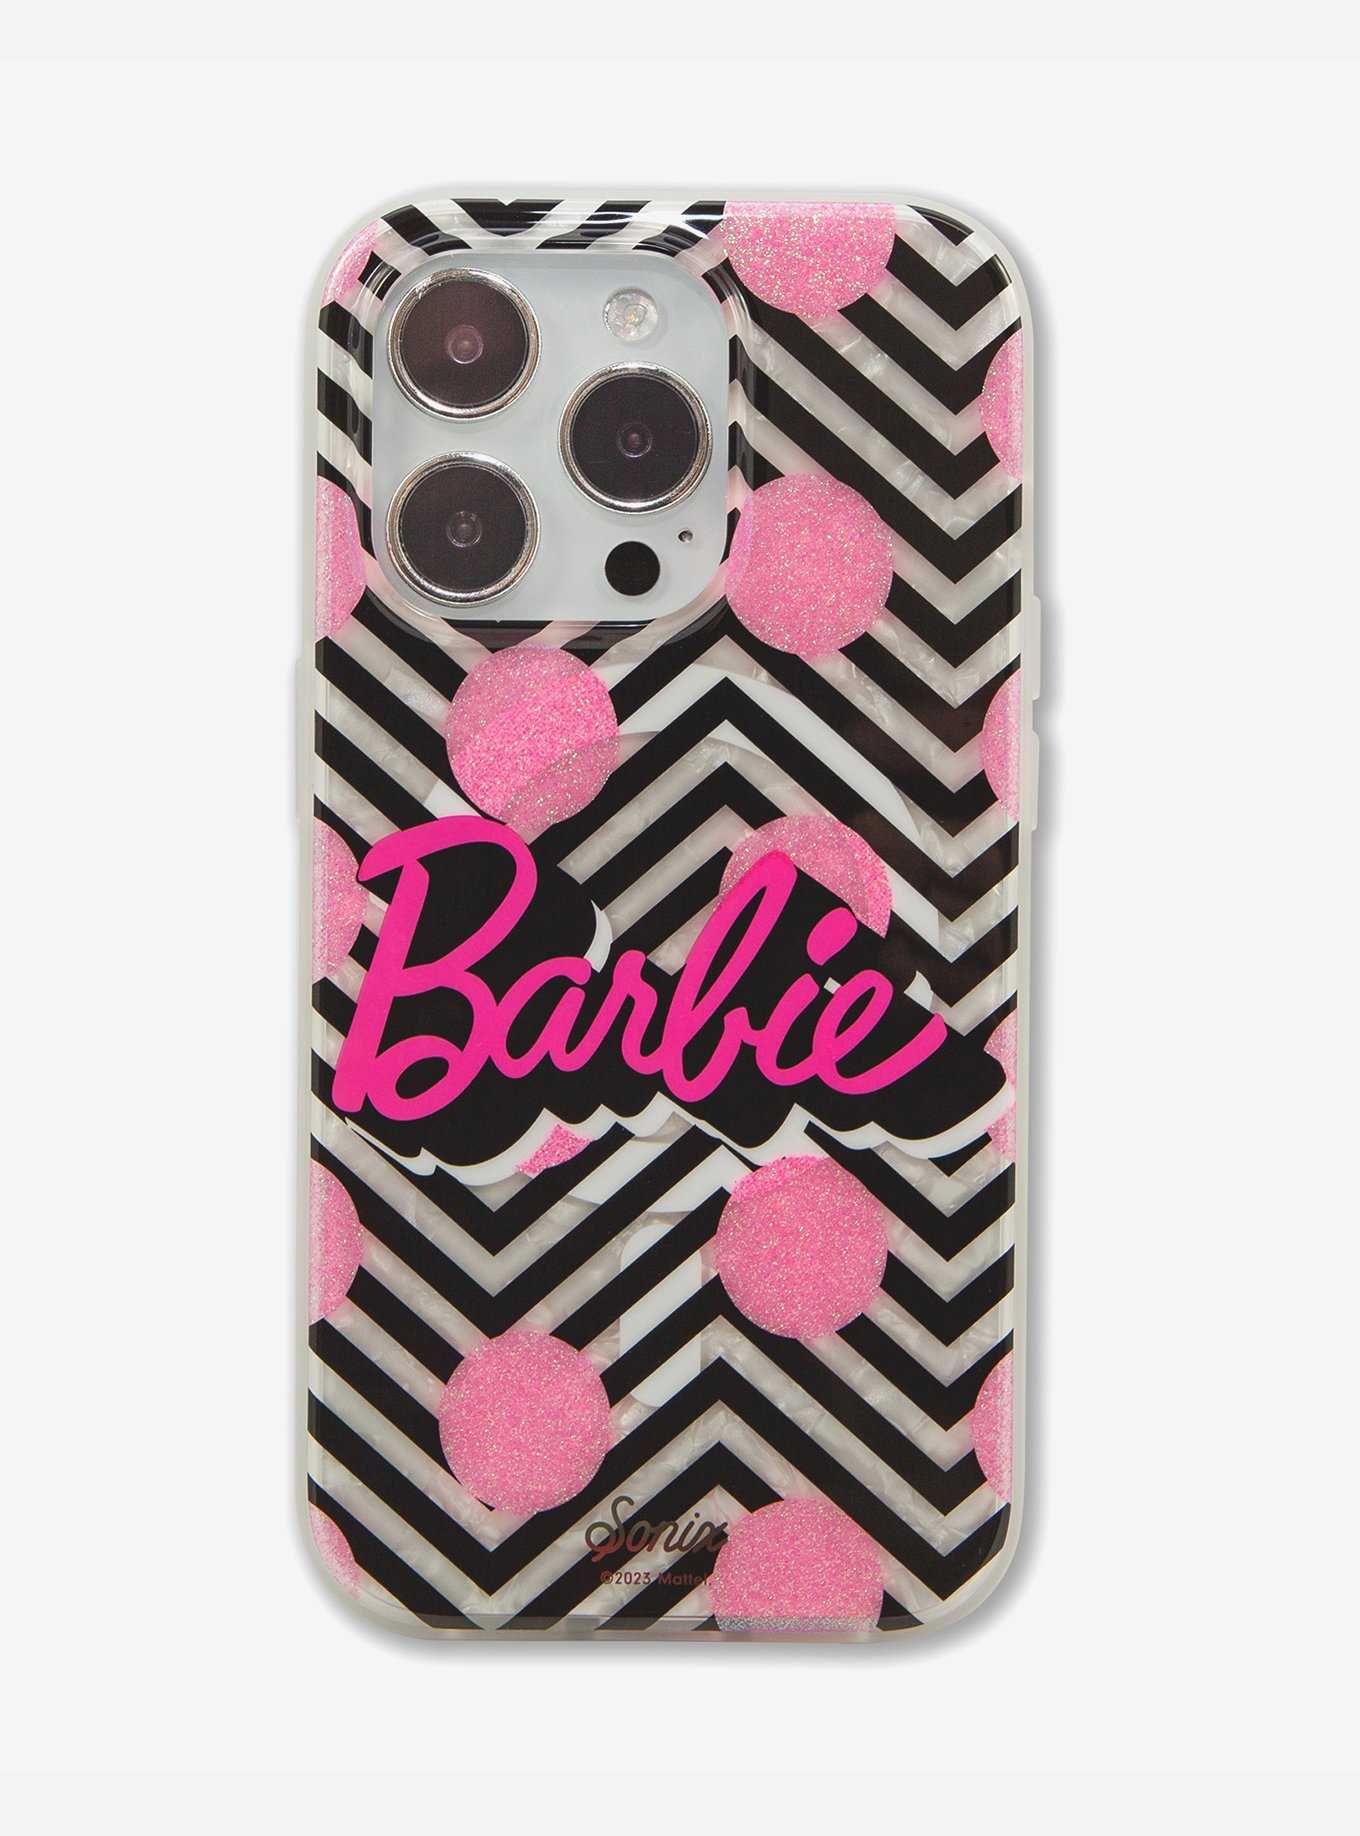 iPhone case Barbie – FIRE CASES